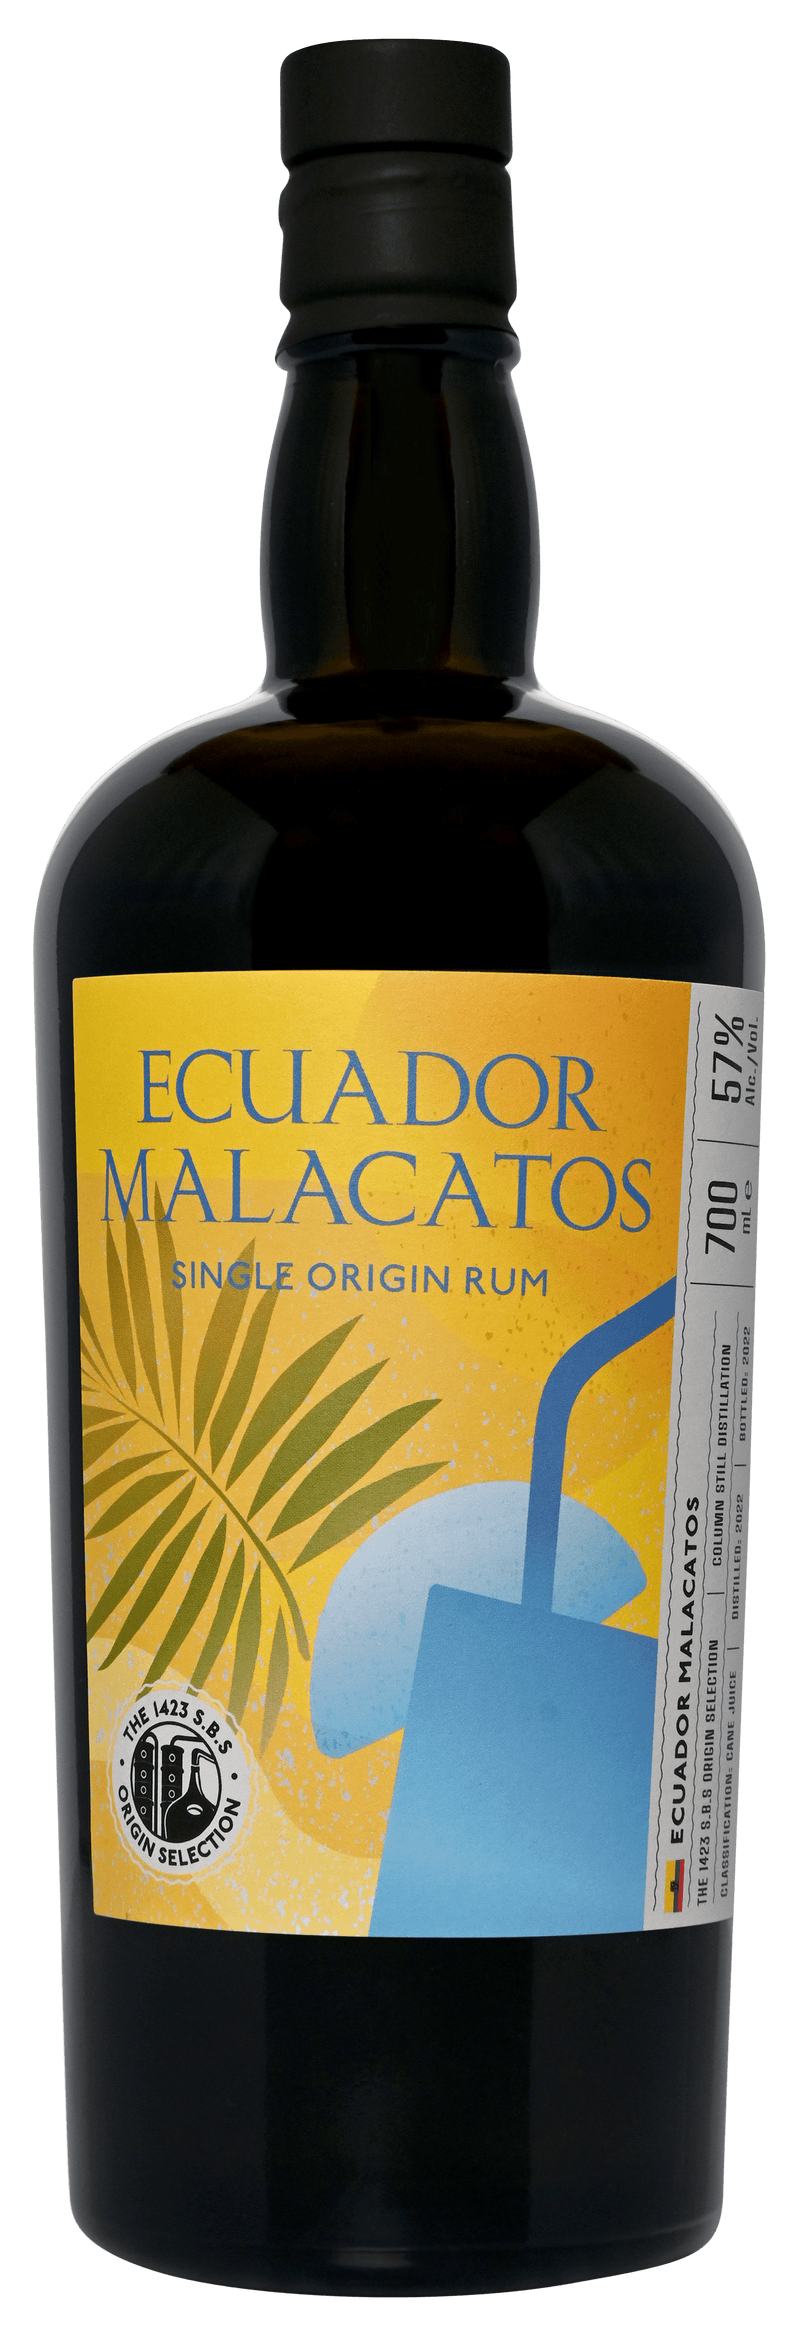 Single Barrel Selection Origins Ecuador Malacatos Rum 70cl